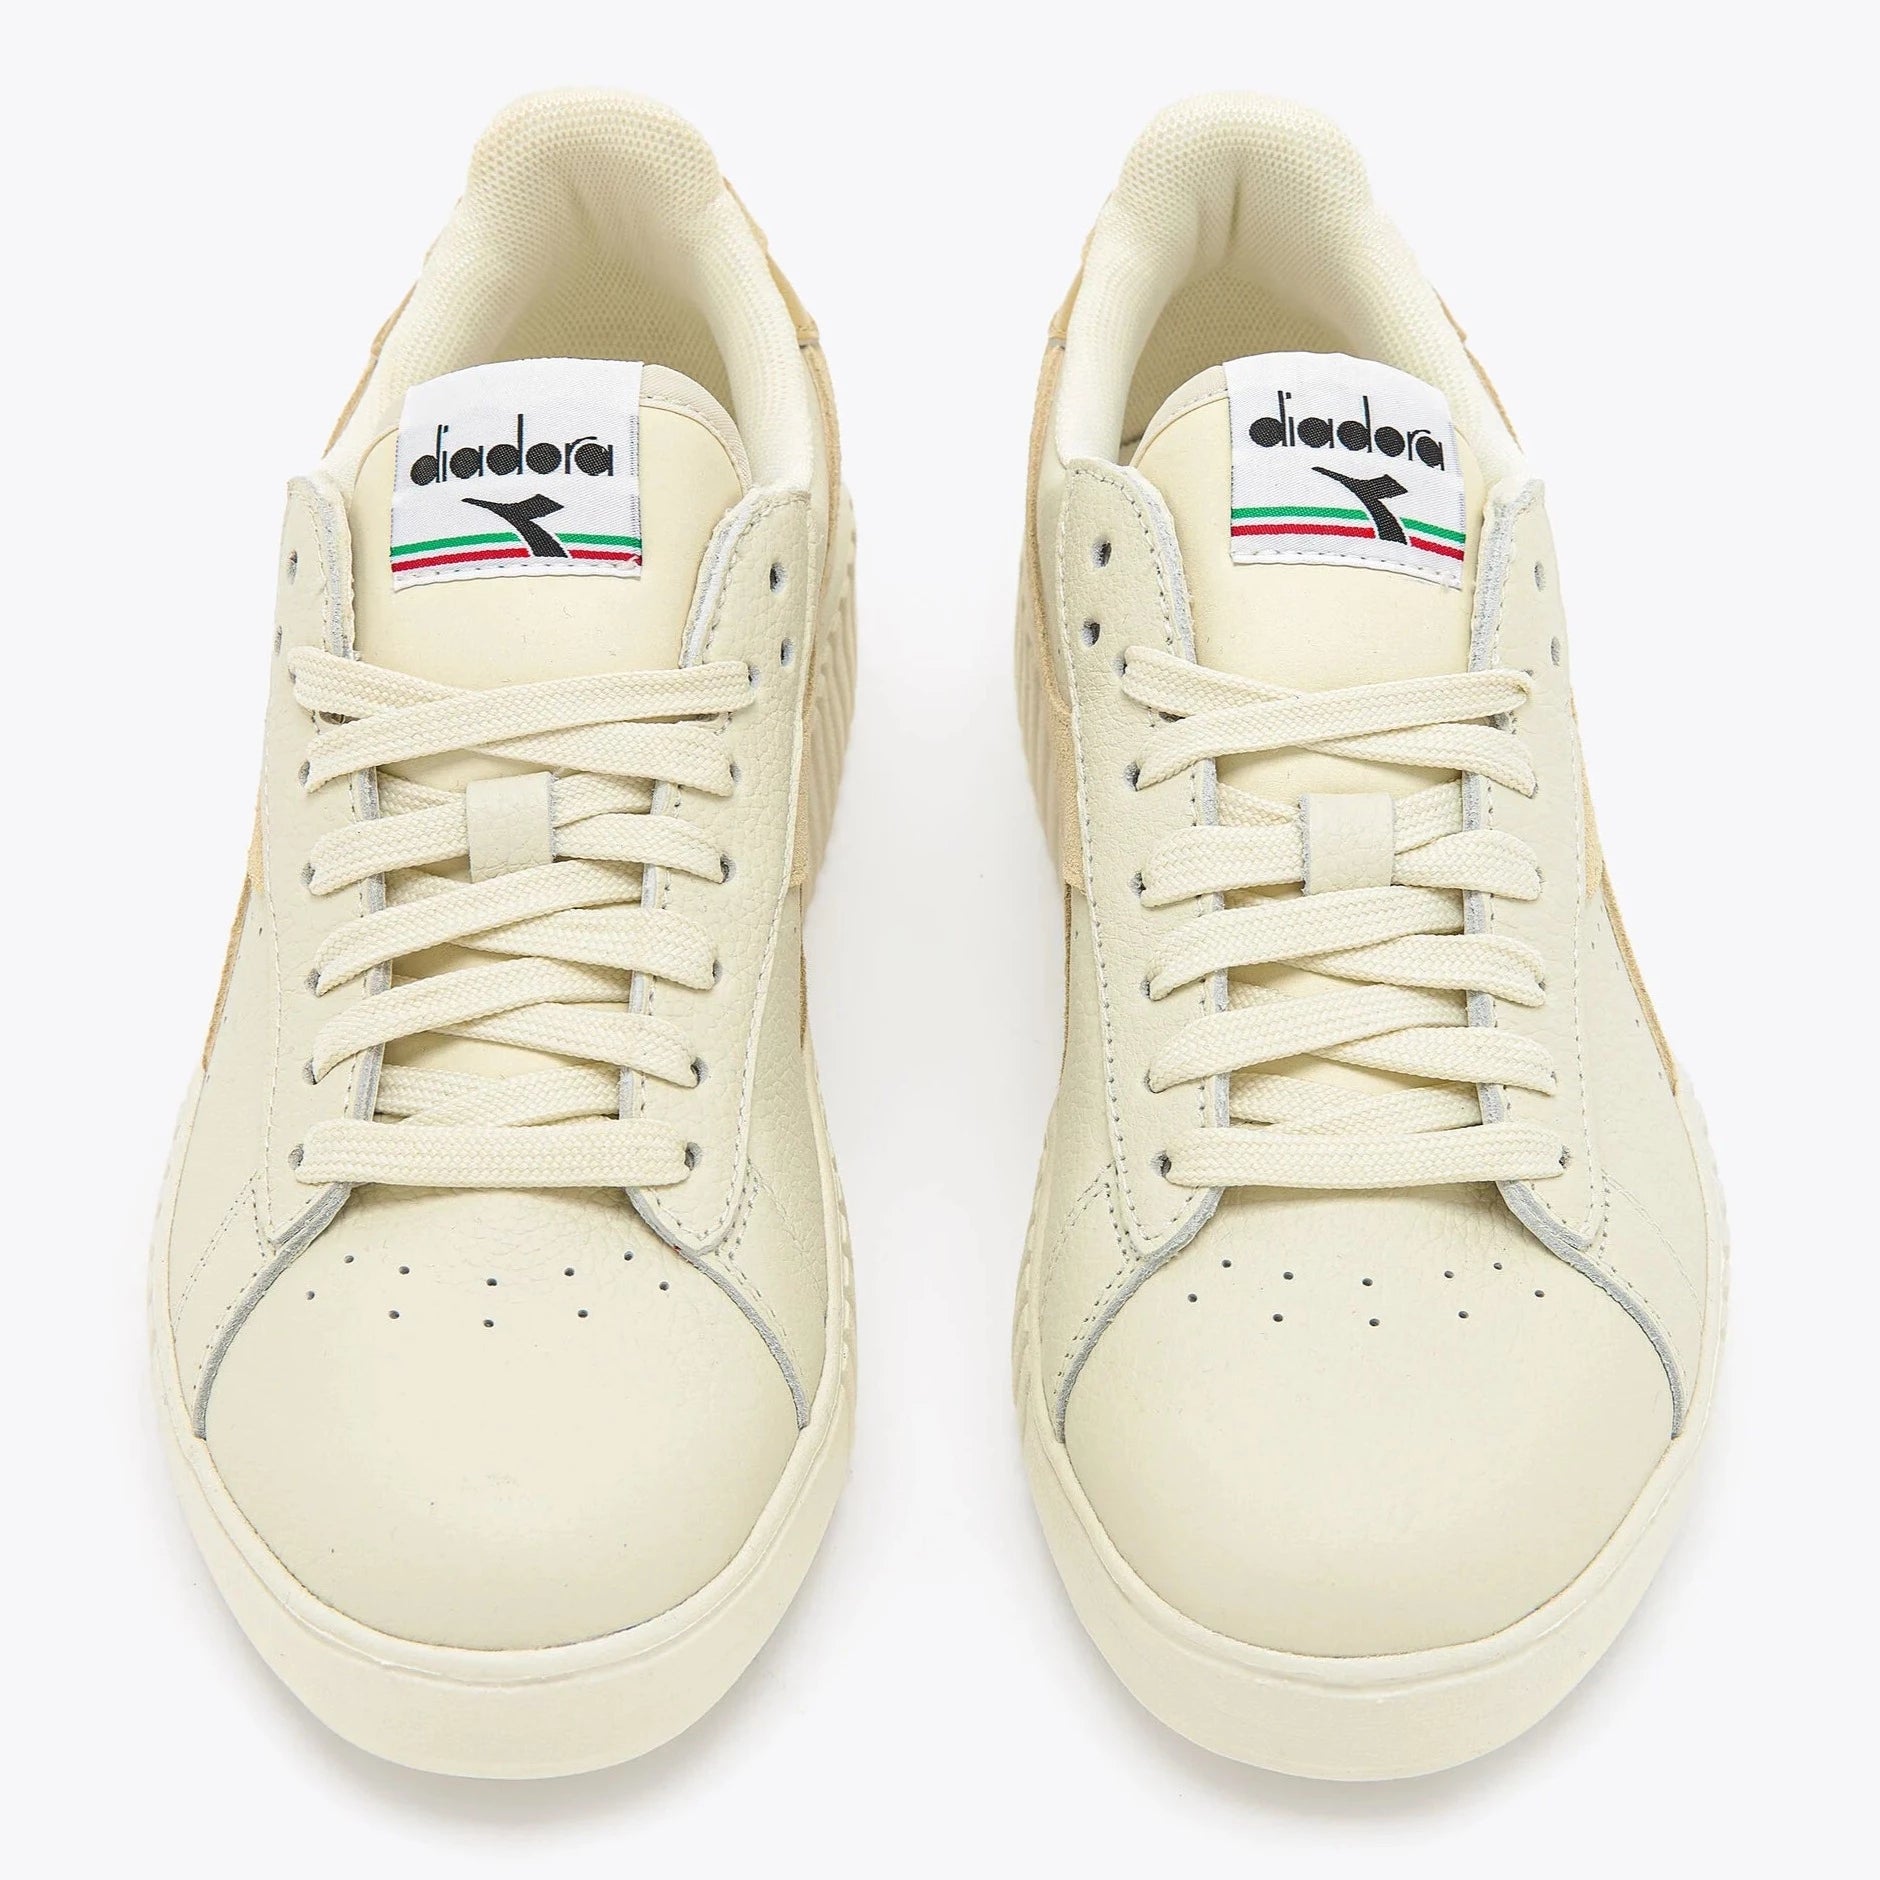 Sneakers De La Marca Diadora Para Mujer Modelo Game Step Premium Tumbled Leather W En Color Blanco